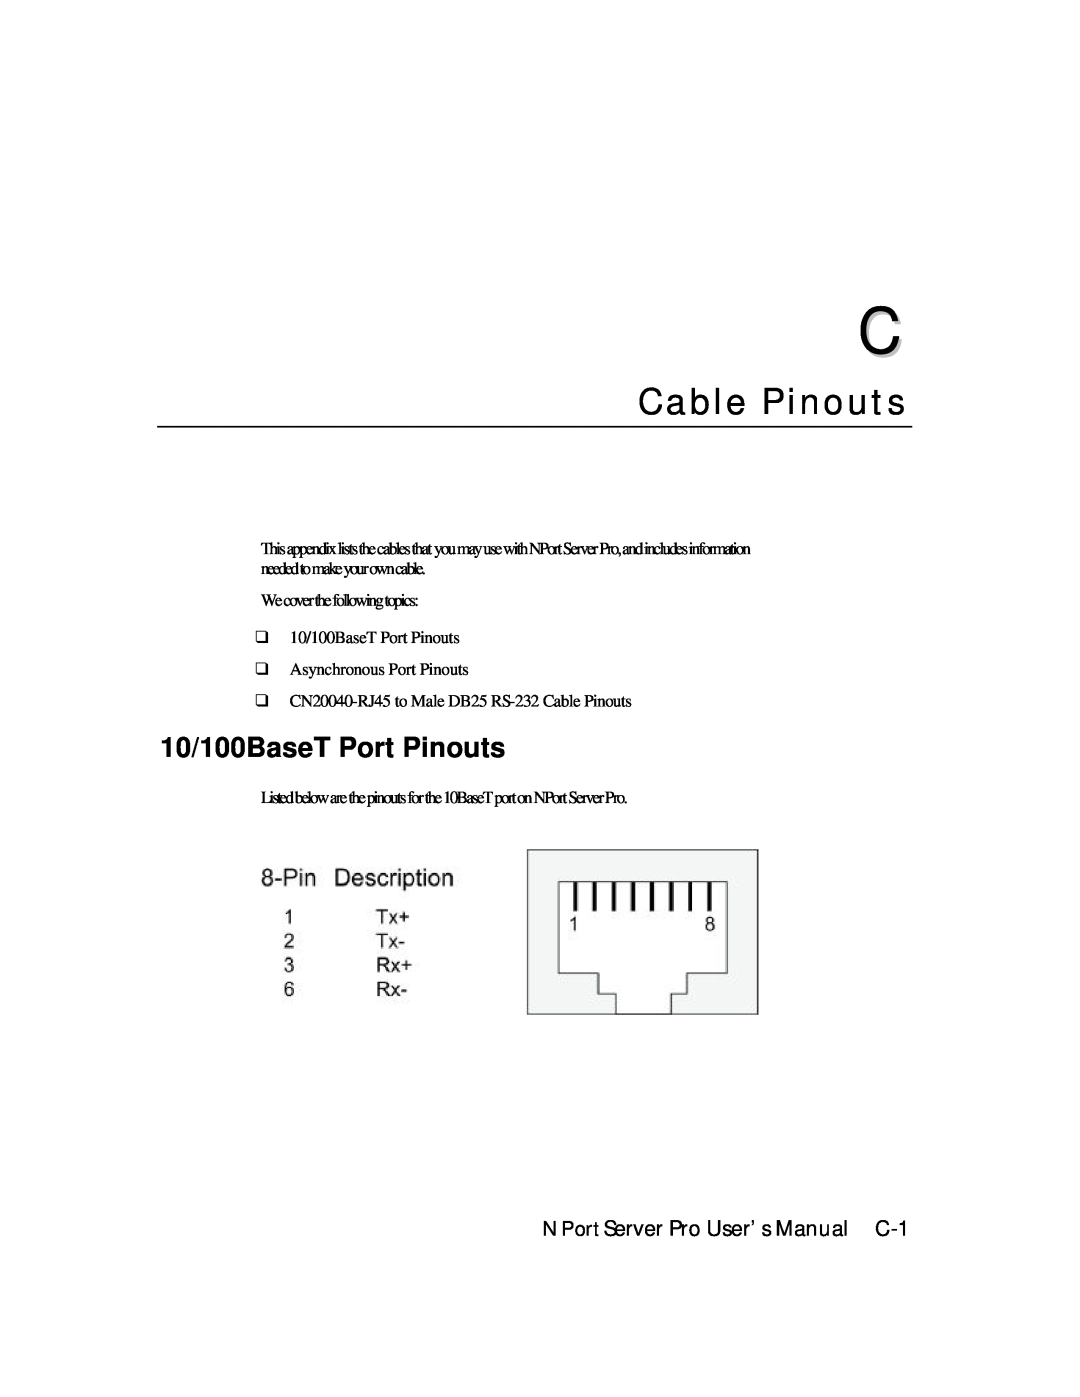 Moxa Technologies DE-308, DE-303 manual Cable Pinouts, 10/100BaseT Port Pinouts, NPort Server Pro User’s Manual C-1 